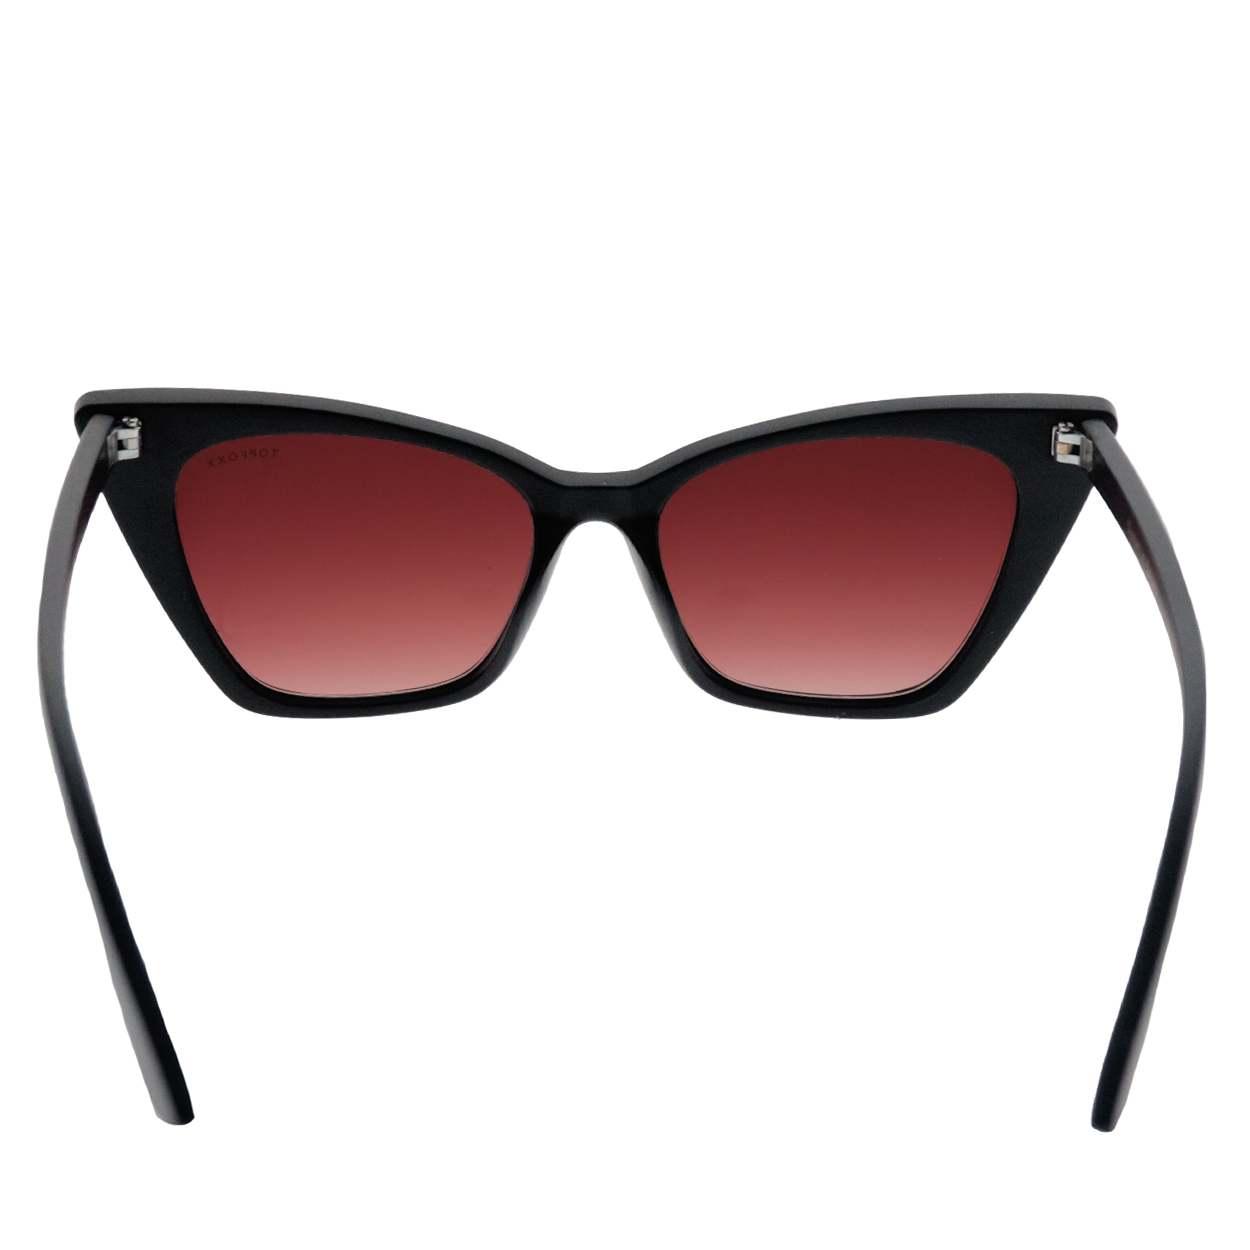 Sustainable Sunglasses for Women - Oversized Cat Eye Shades - Nature - Sunset in Sahara - Back details - TopFoxx